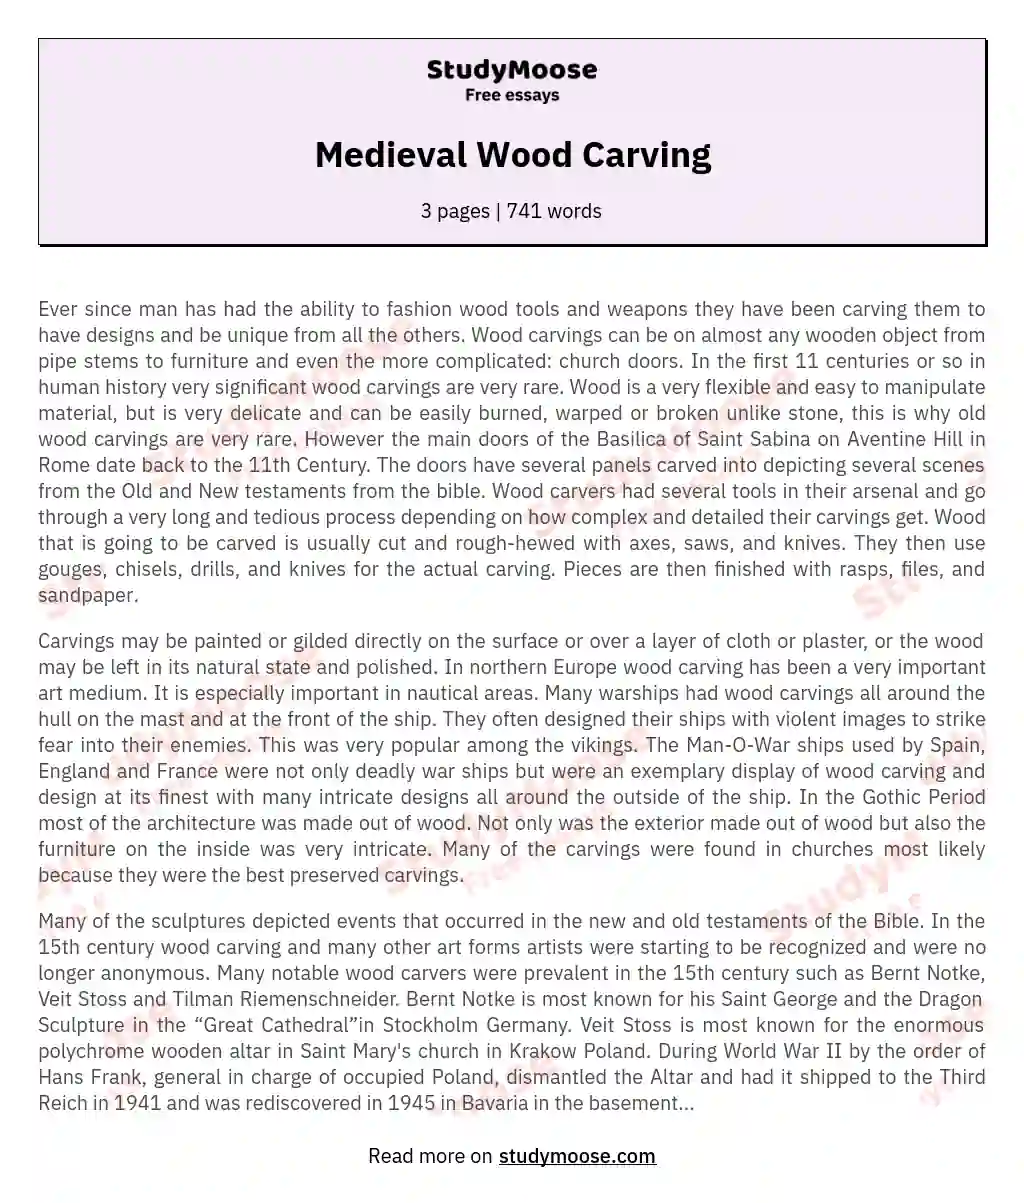 Medieval Wood Carving essay